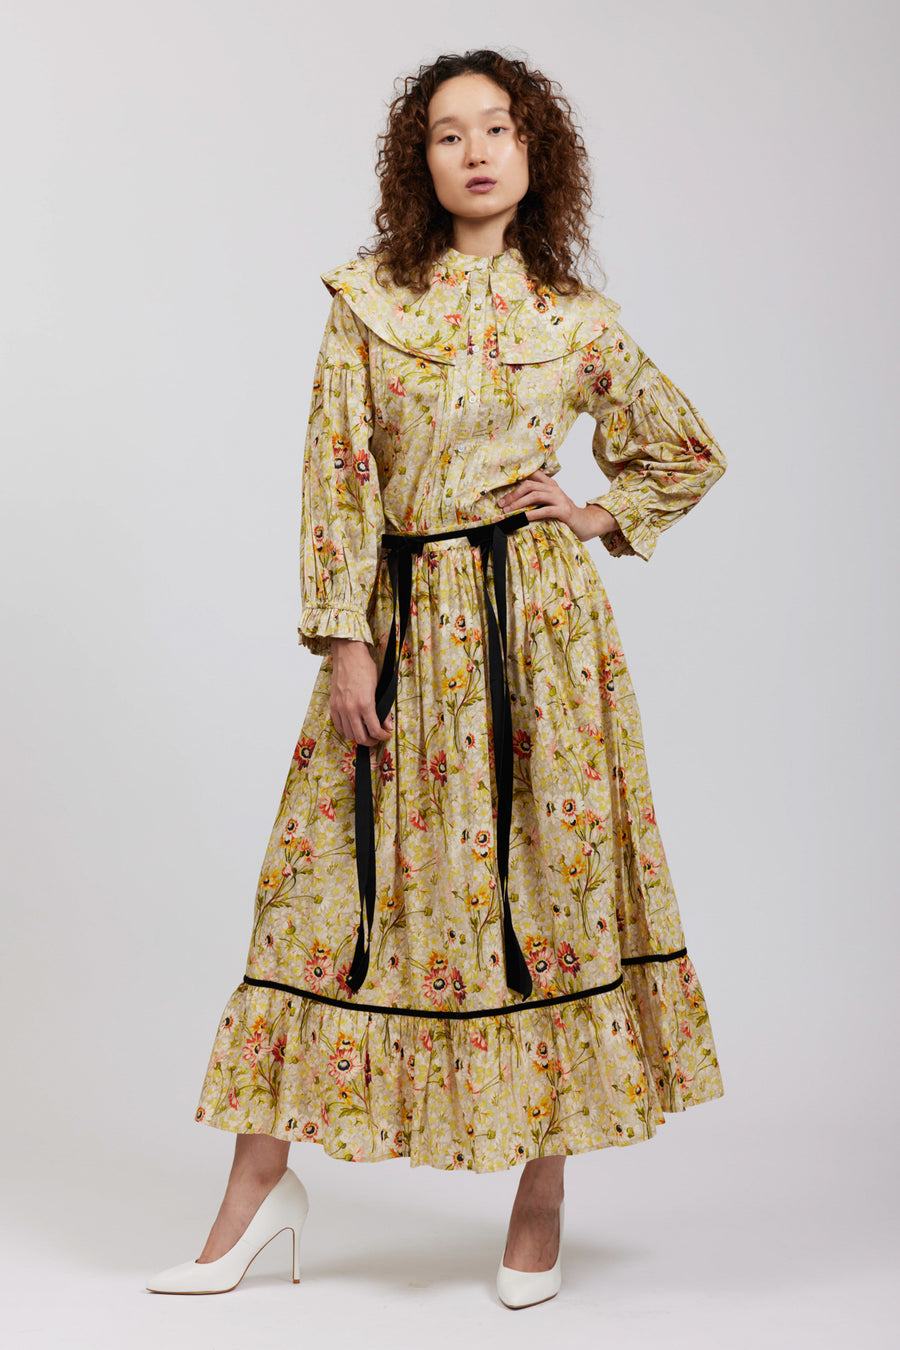 BATSHEVA - Laura Ashley x Batsheva Kipp Skirt in Witton Floral